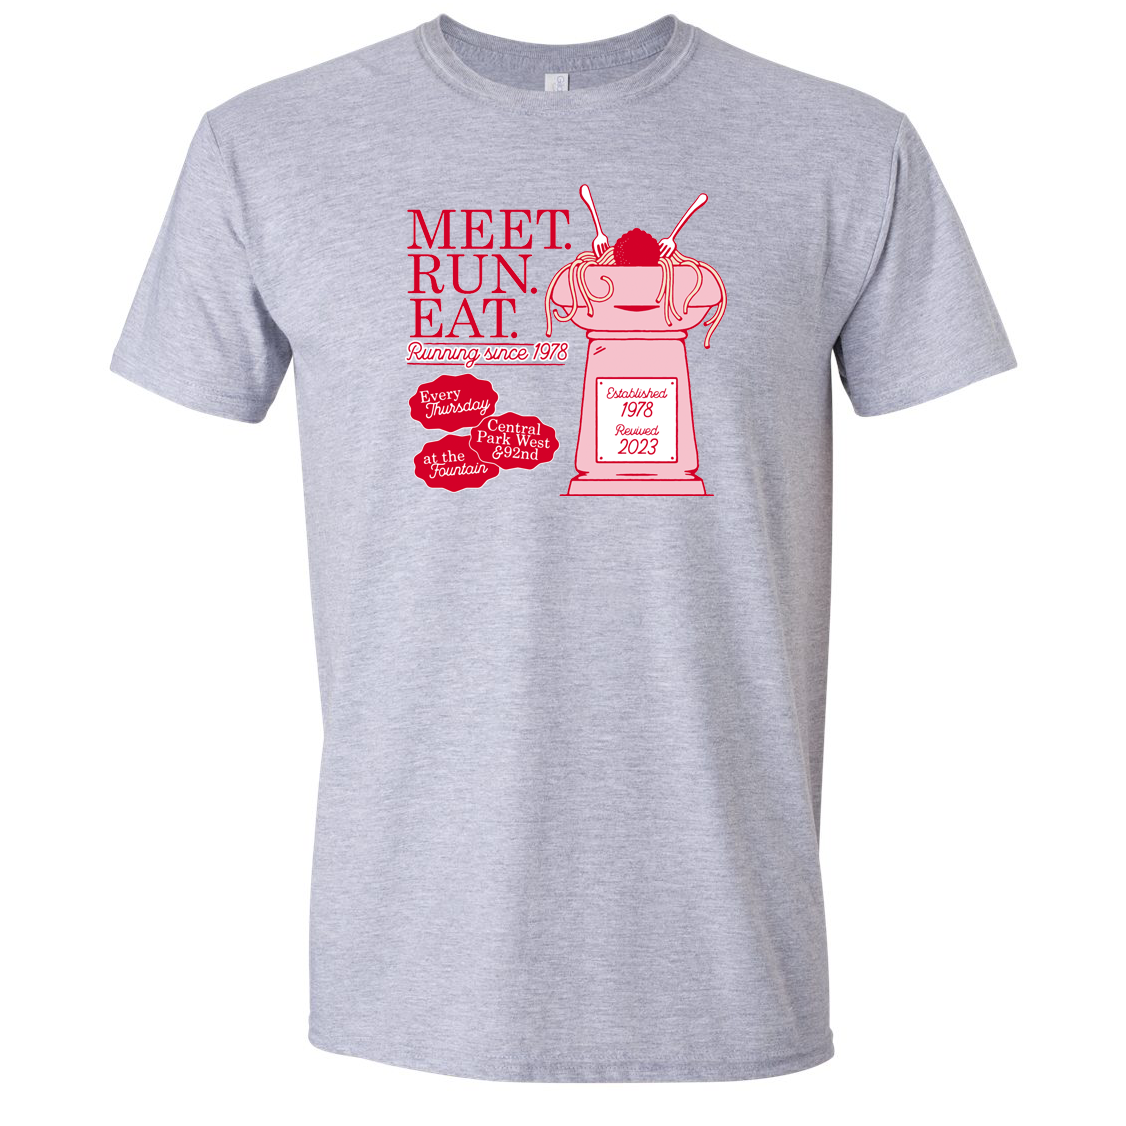 Marathoning and Pasta Club Softstyle T-Shirt